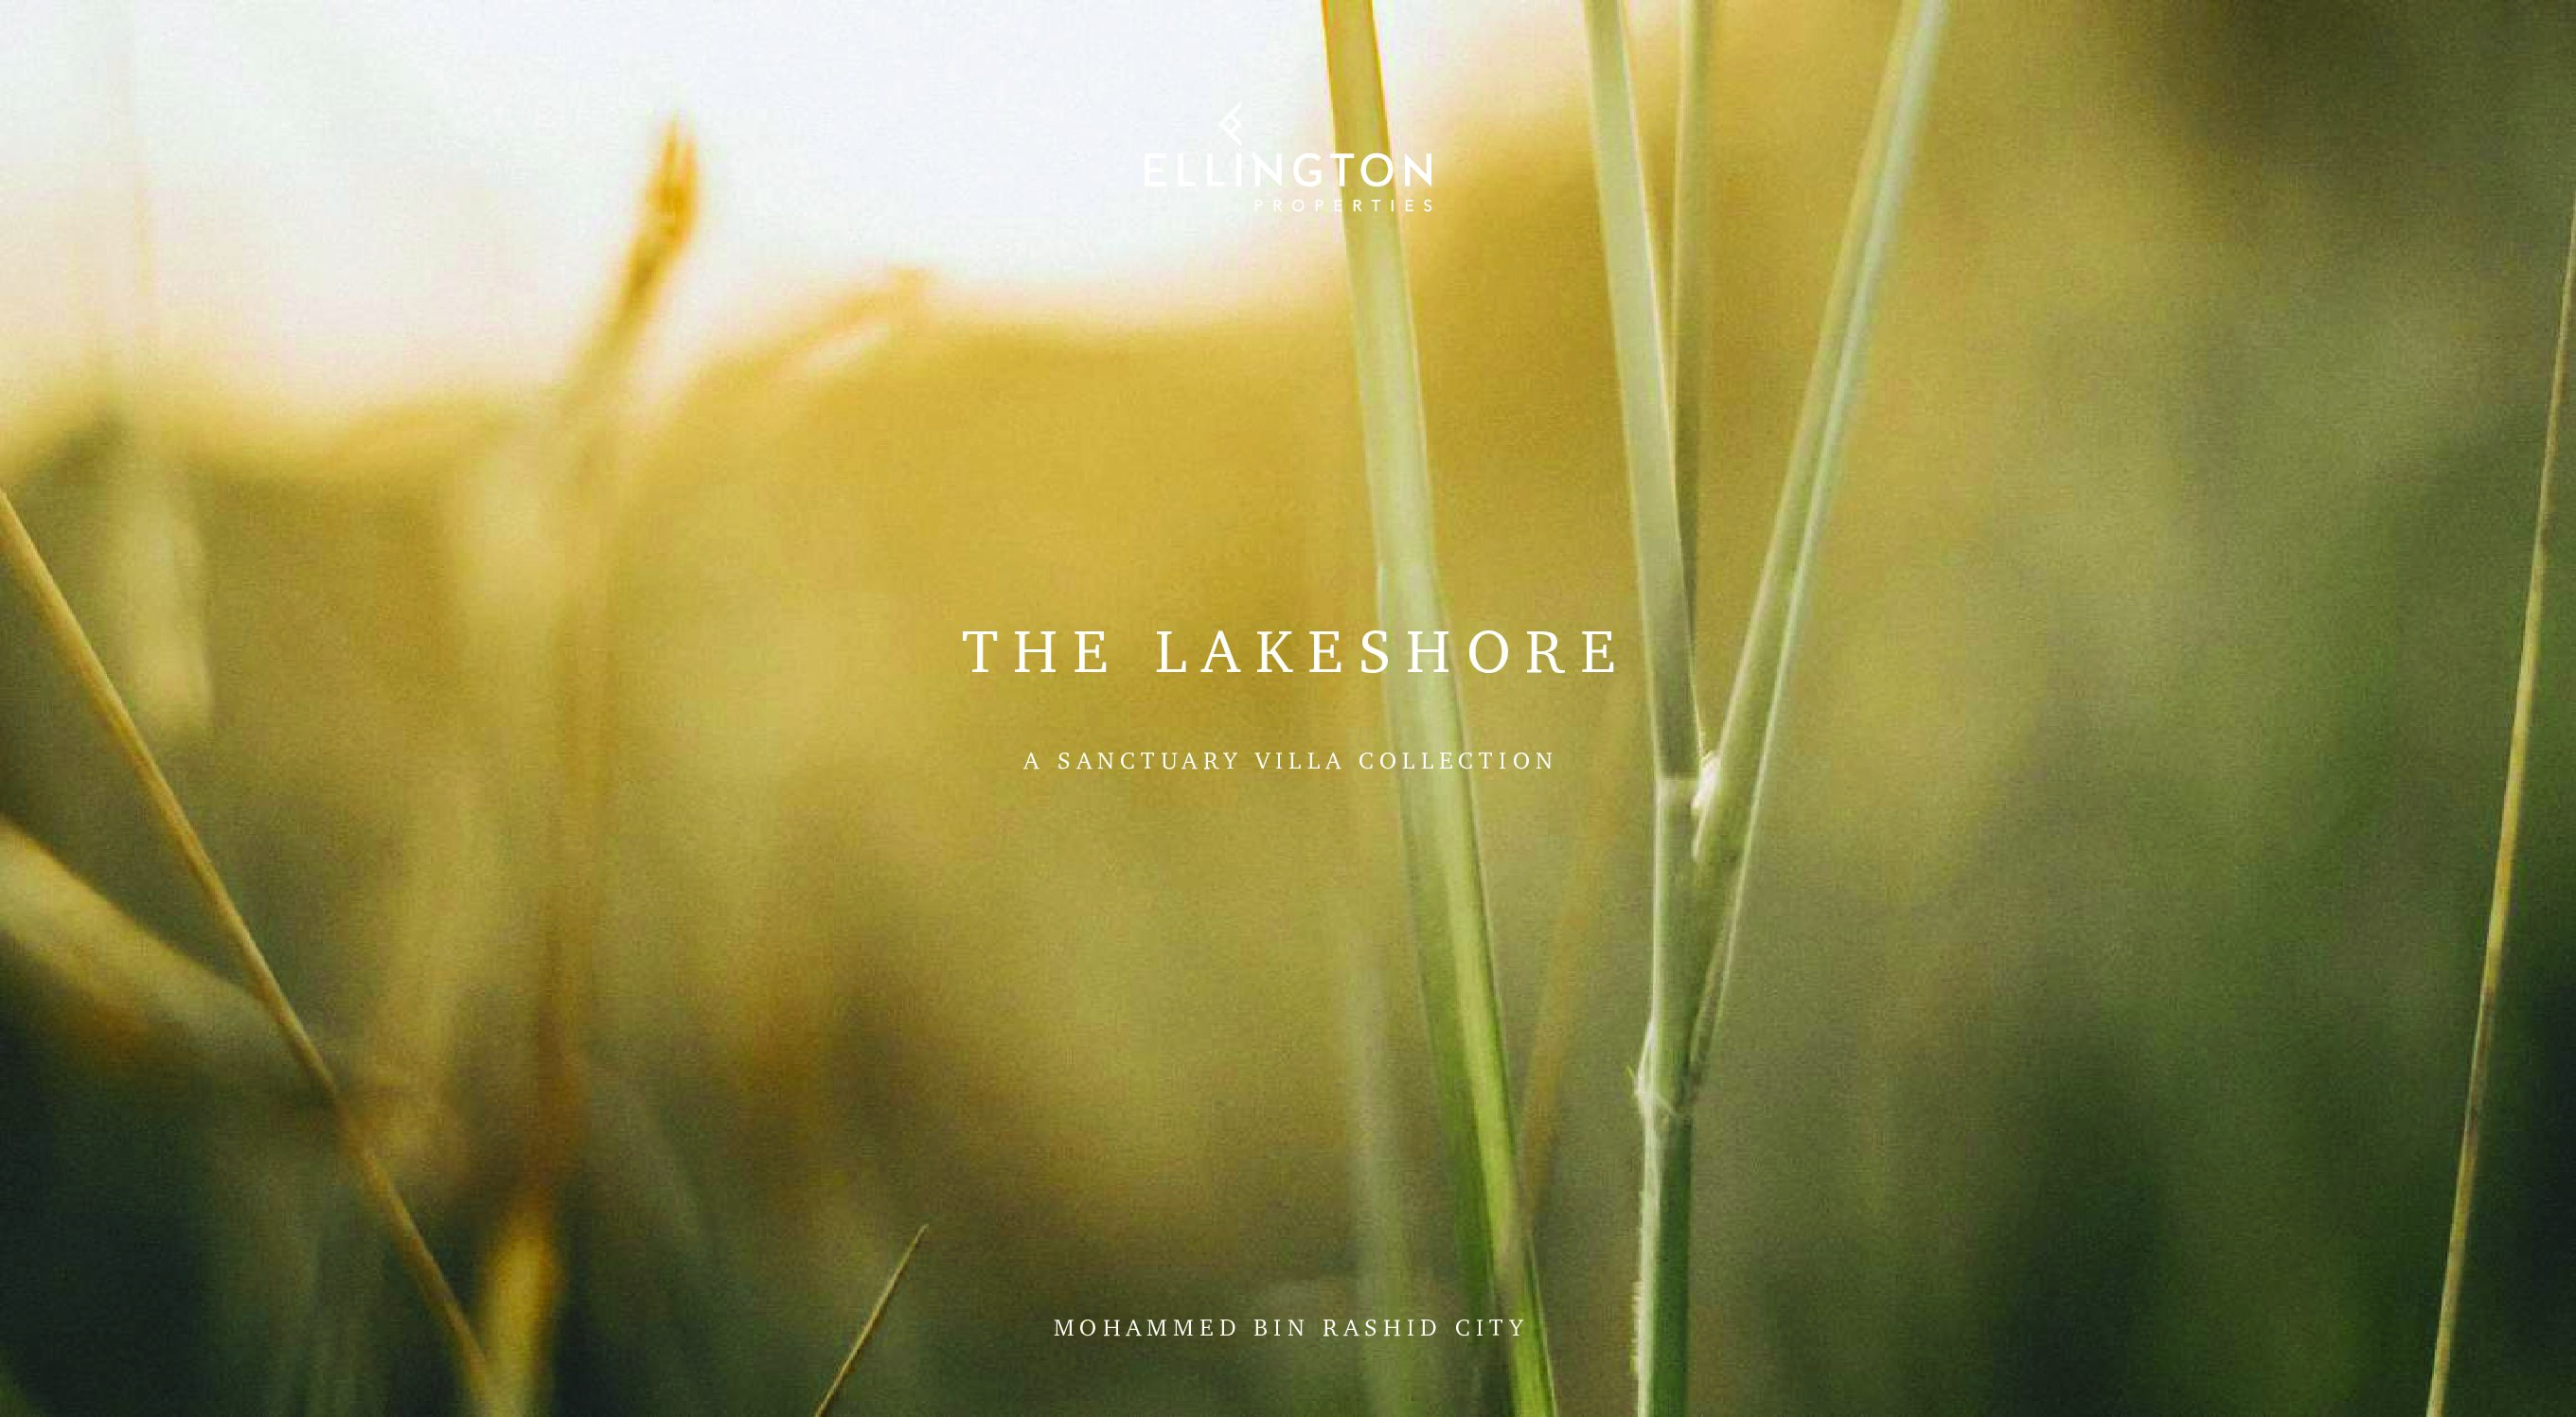 The-Lakeshore-Villas-at-MBR-City-Brochure